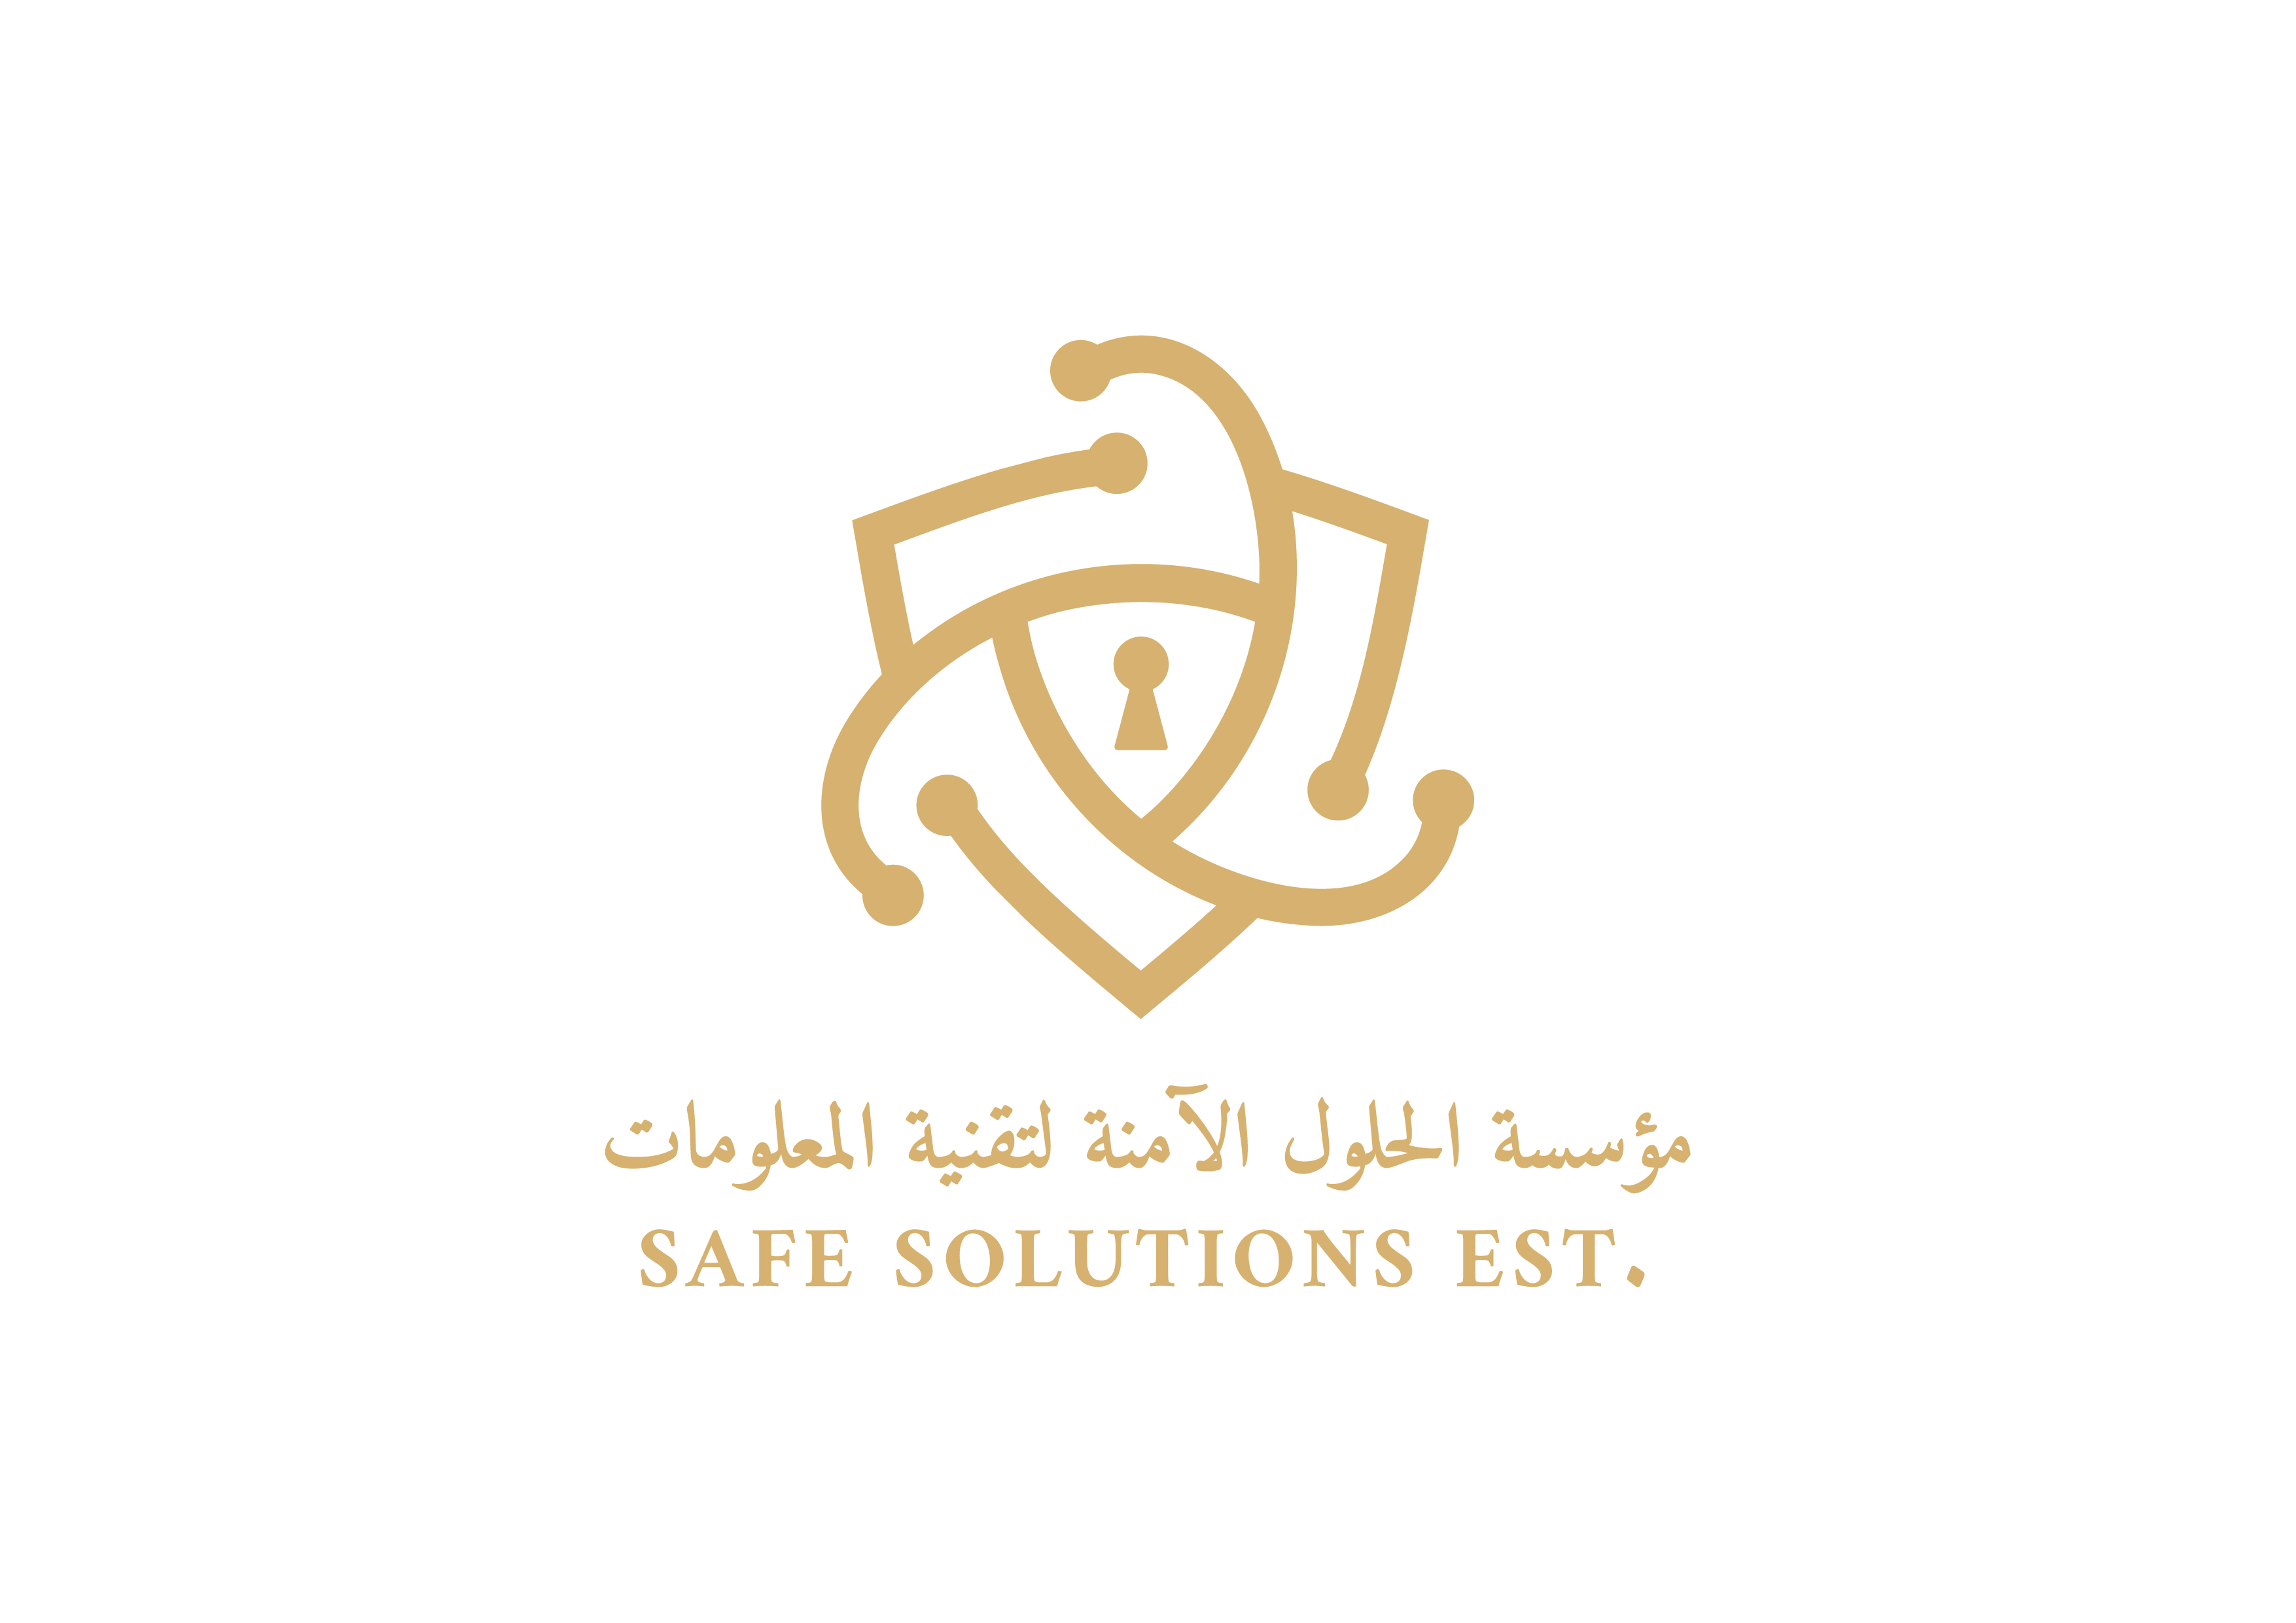 Safe solutions est